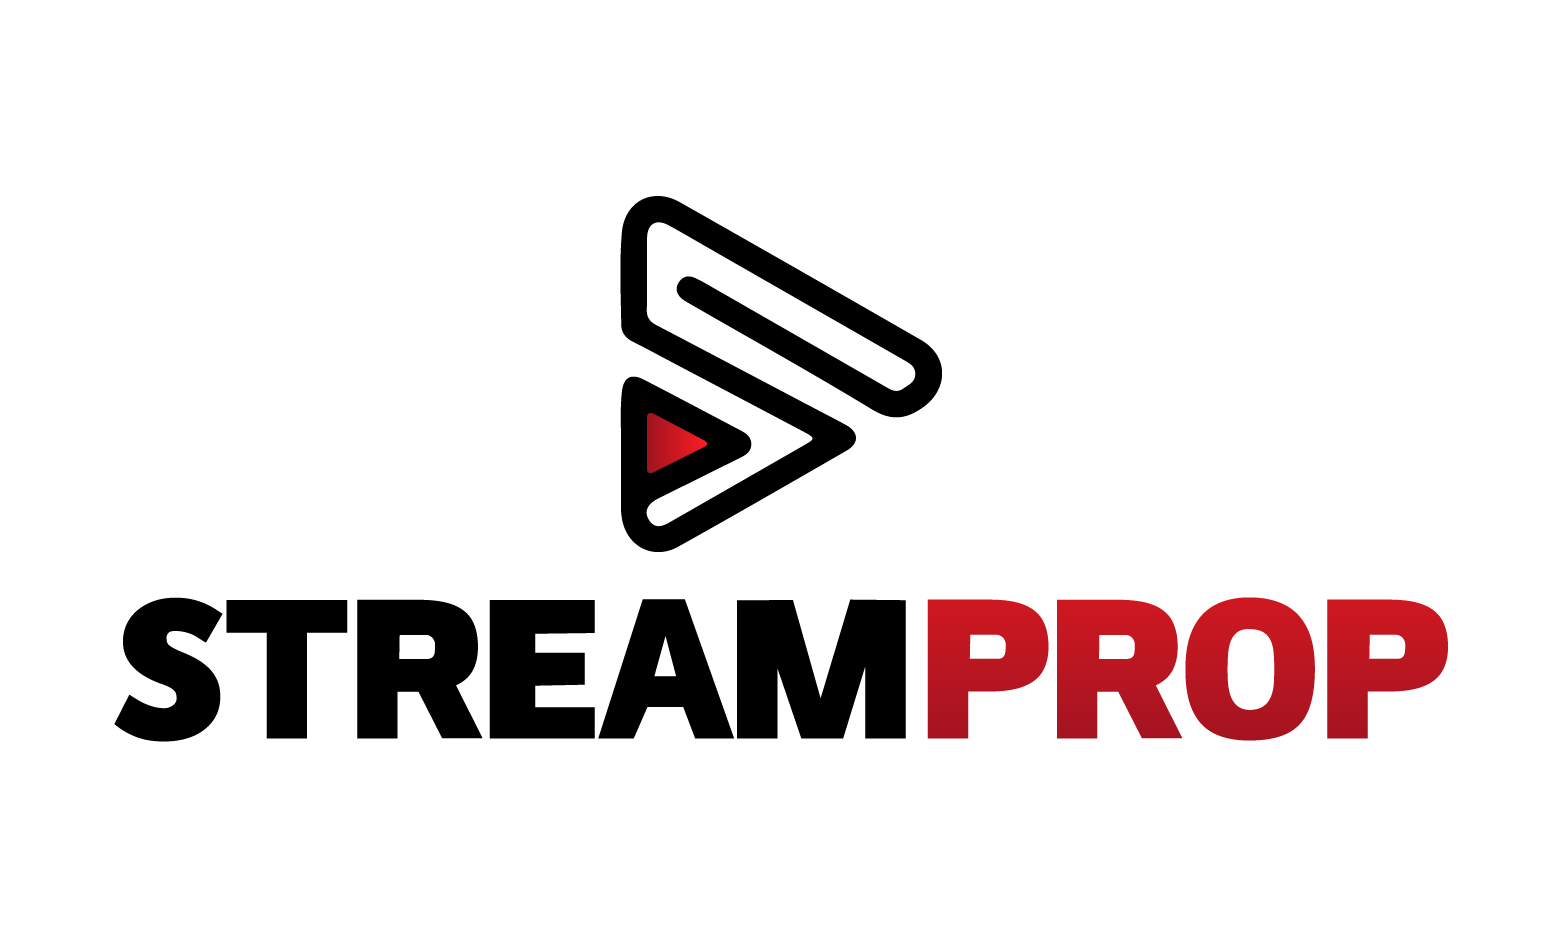 StreamProp.com - Creative brandable domain for sale